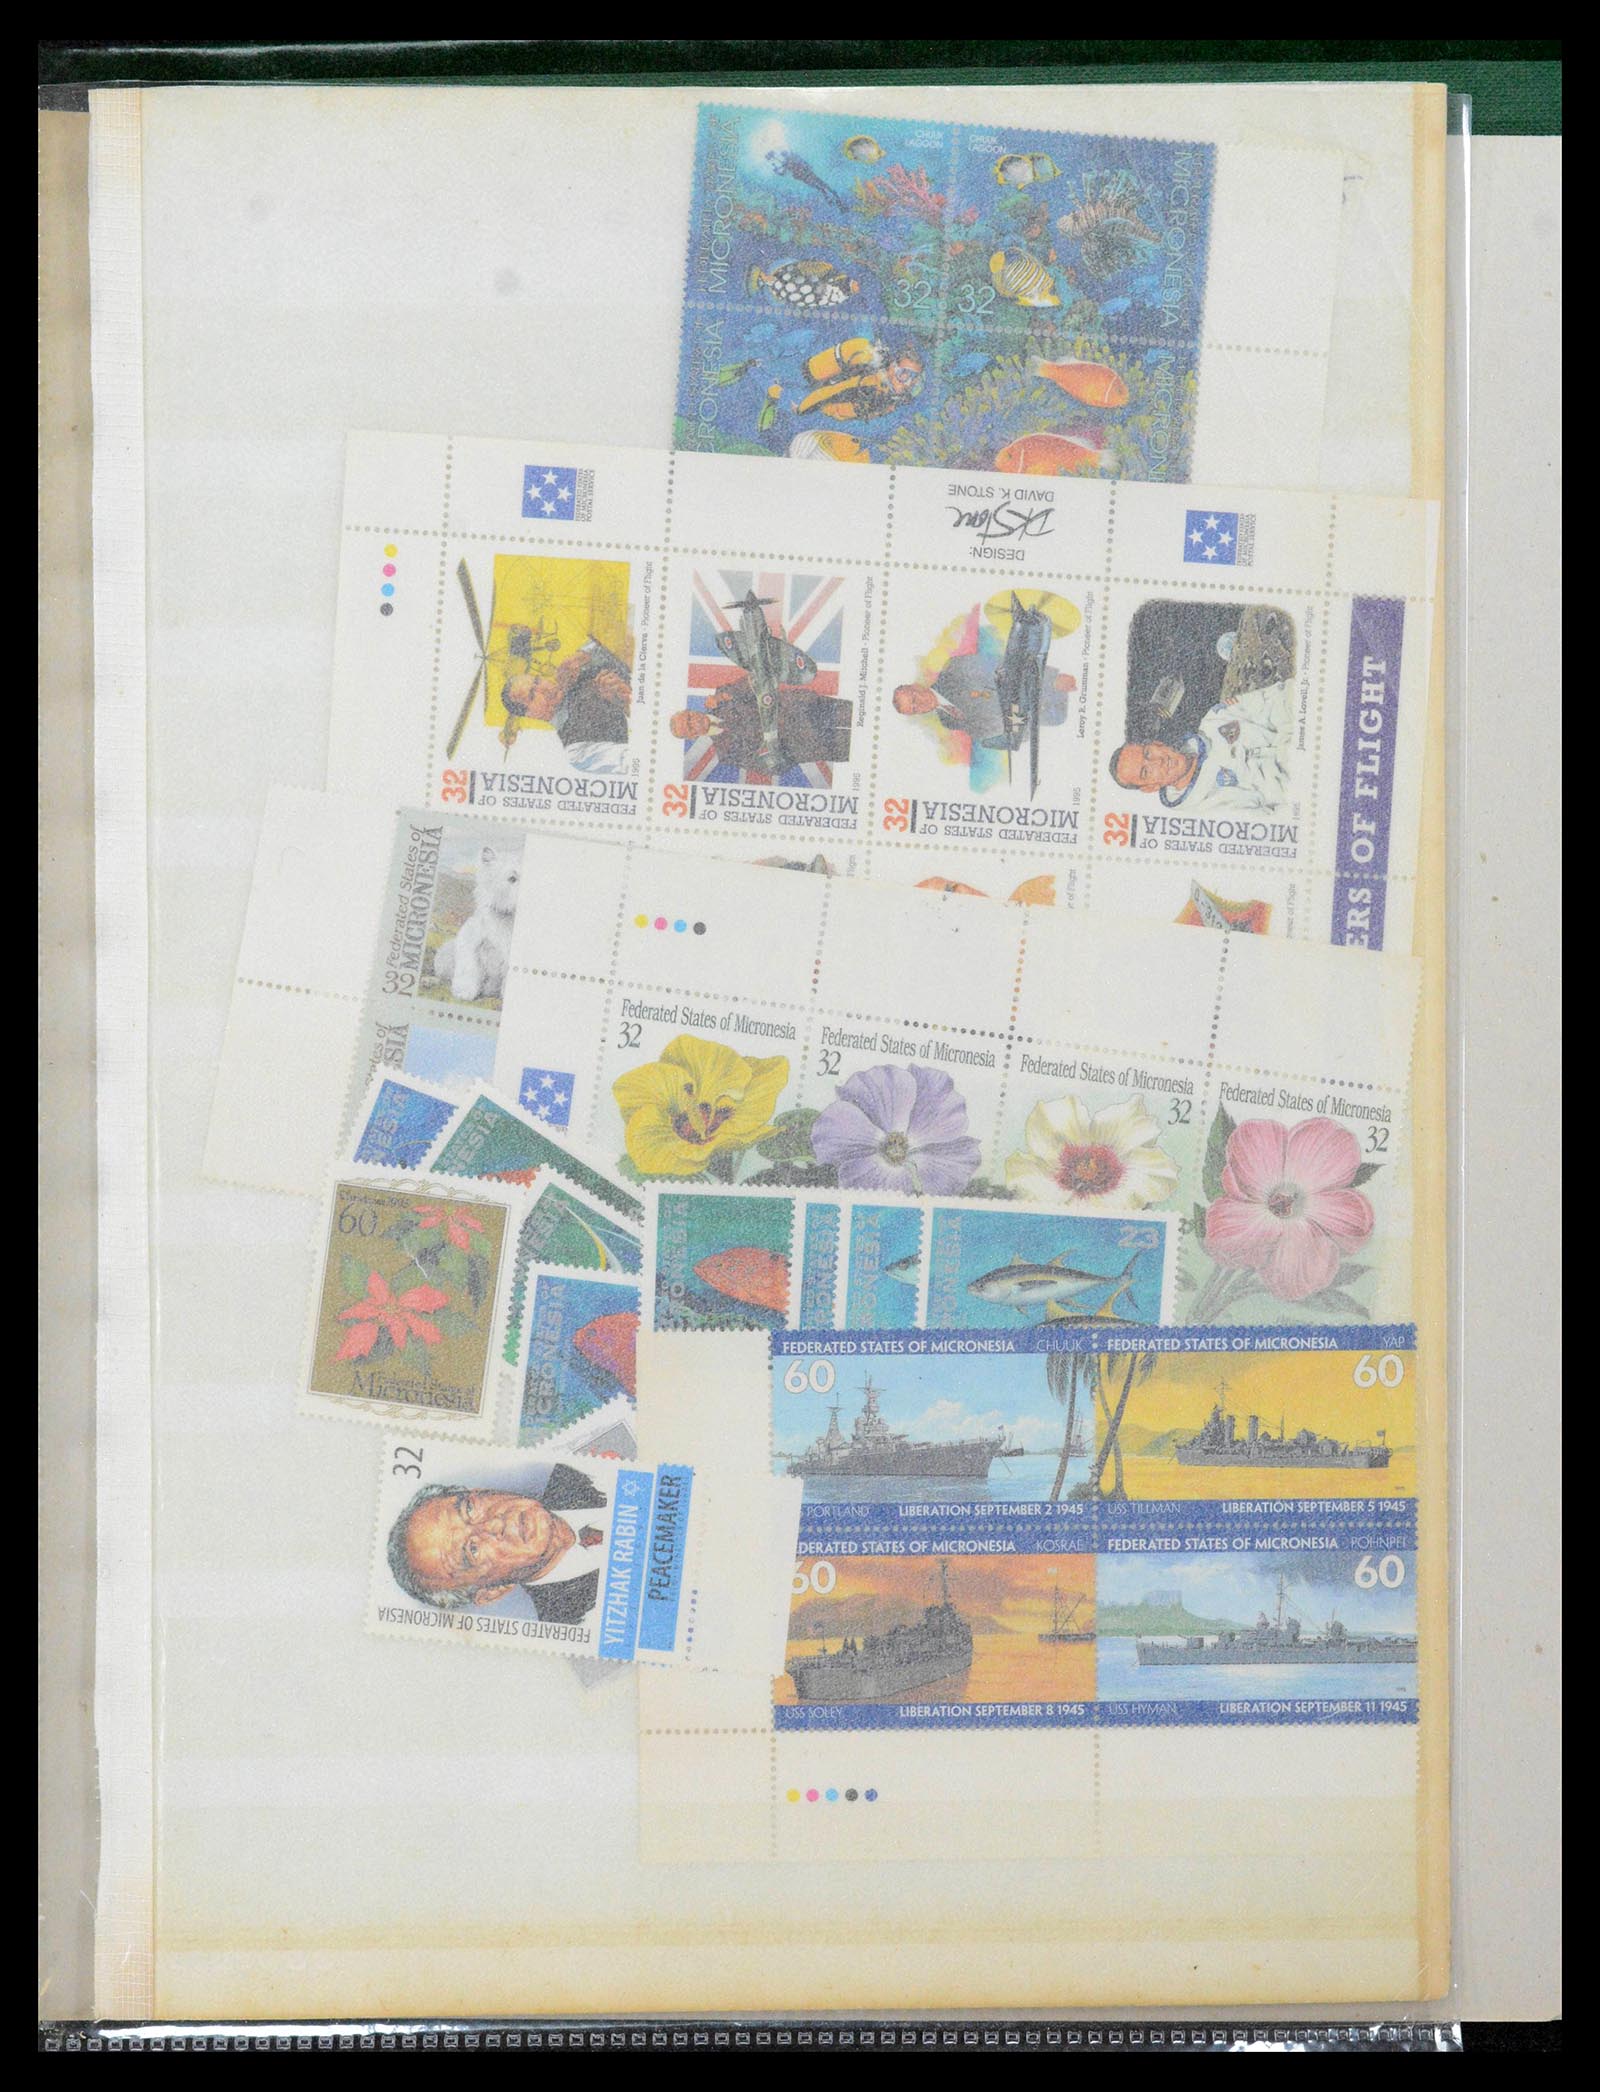 39222 0109 - Stamp collection 39222 Palau, Micronesia and Marshall islands 1980-1995.